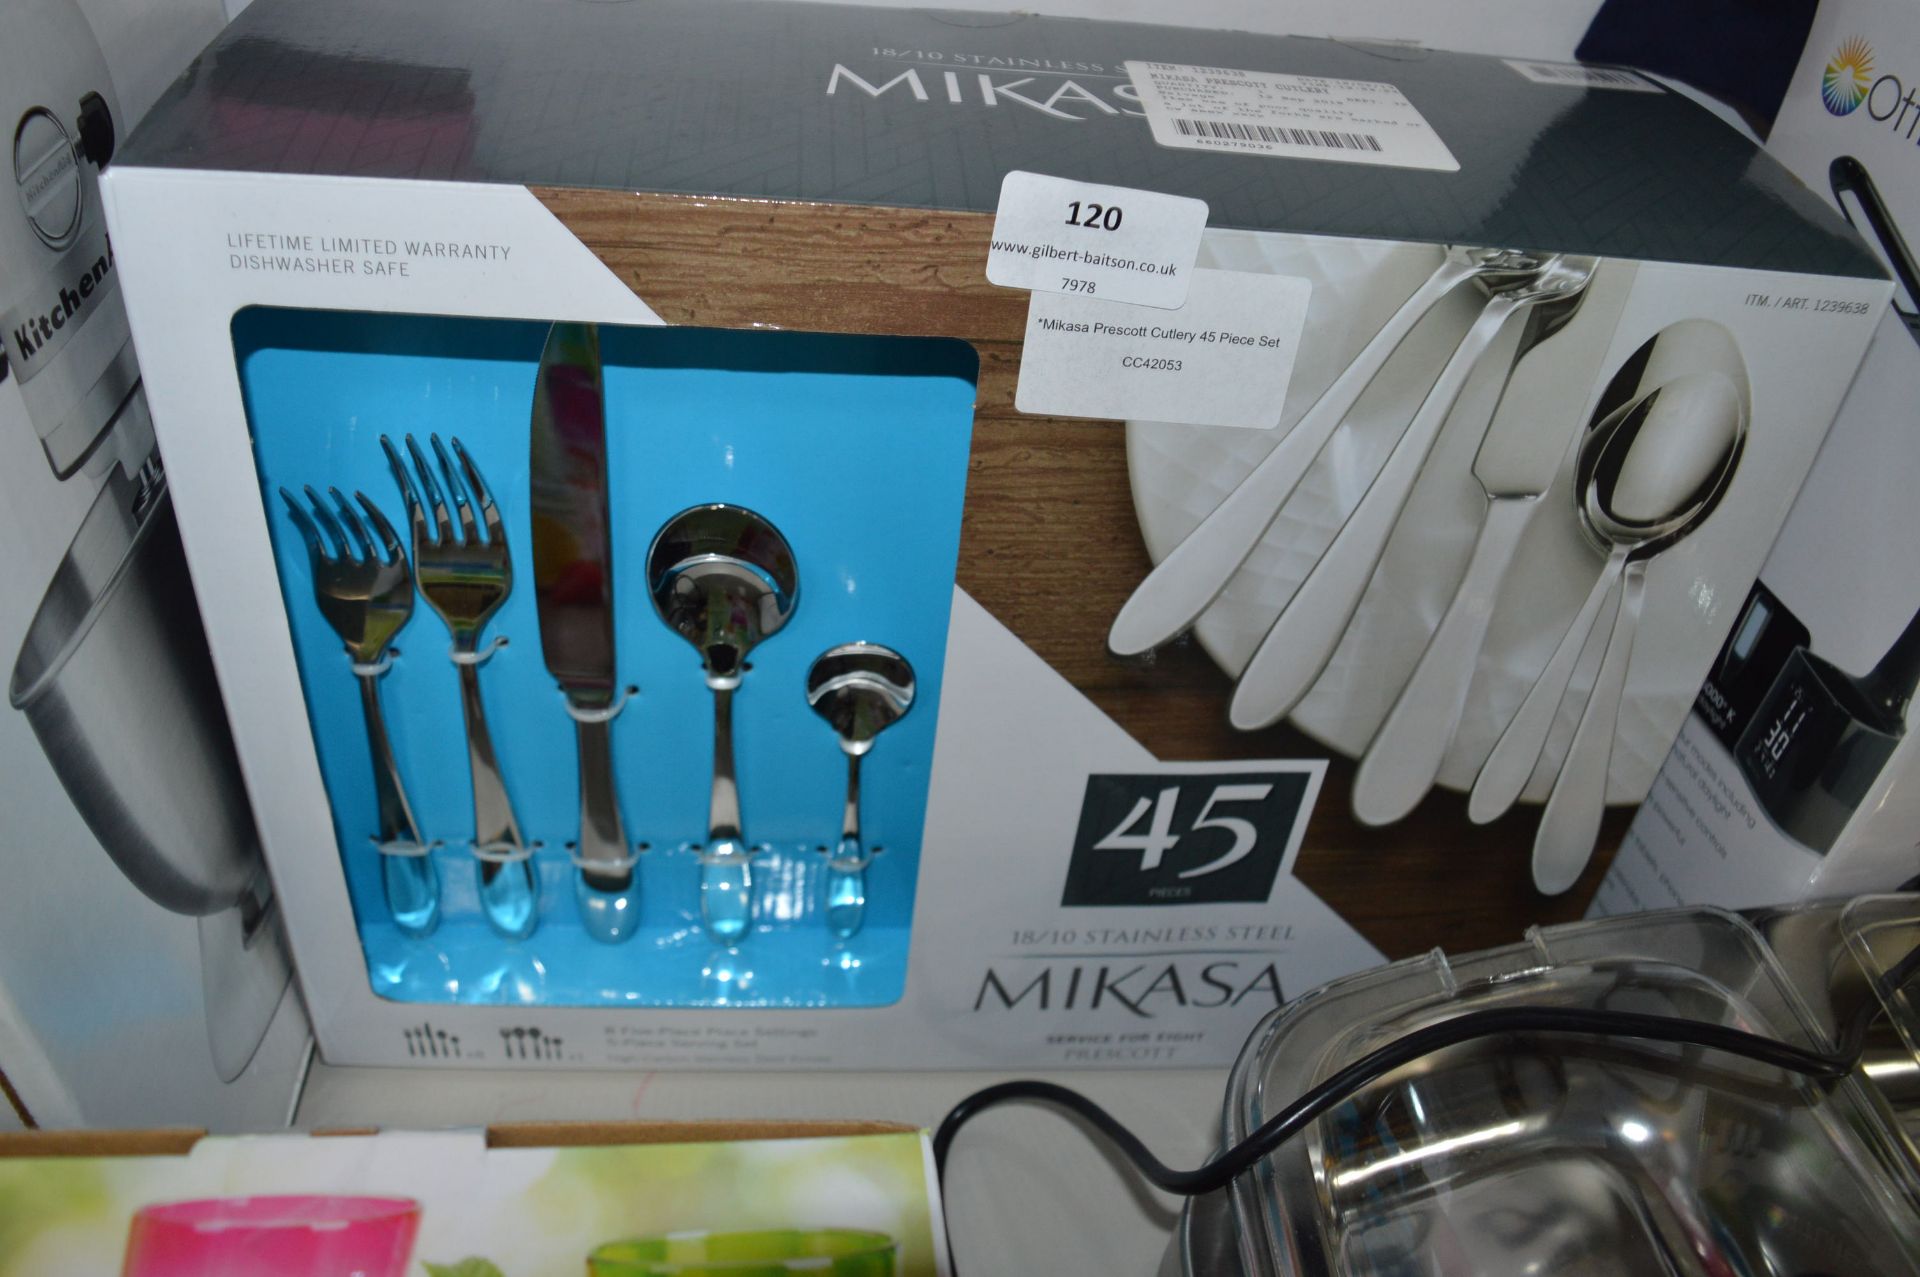 *Mikasa Prescott Cutlery 45 Piece Set